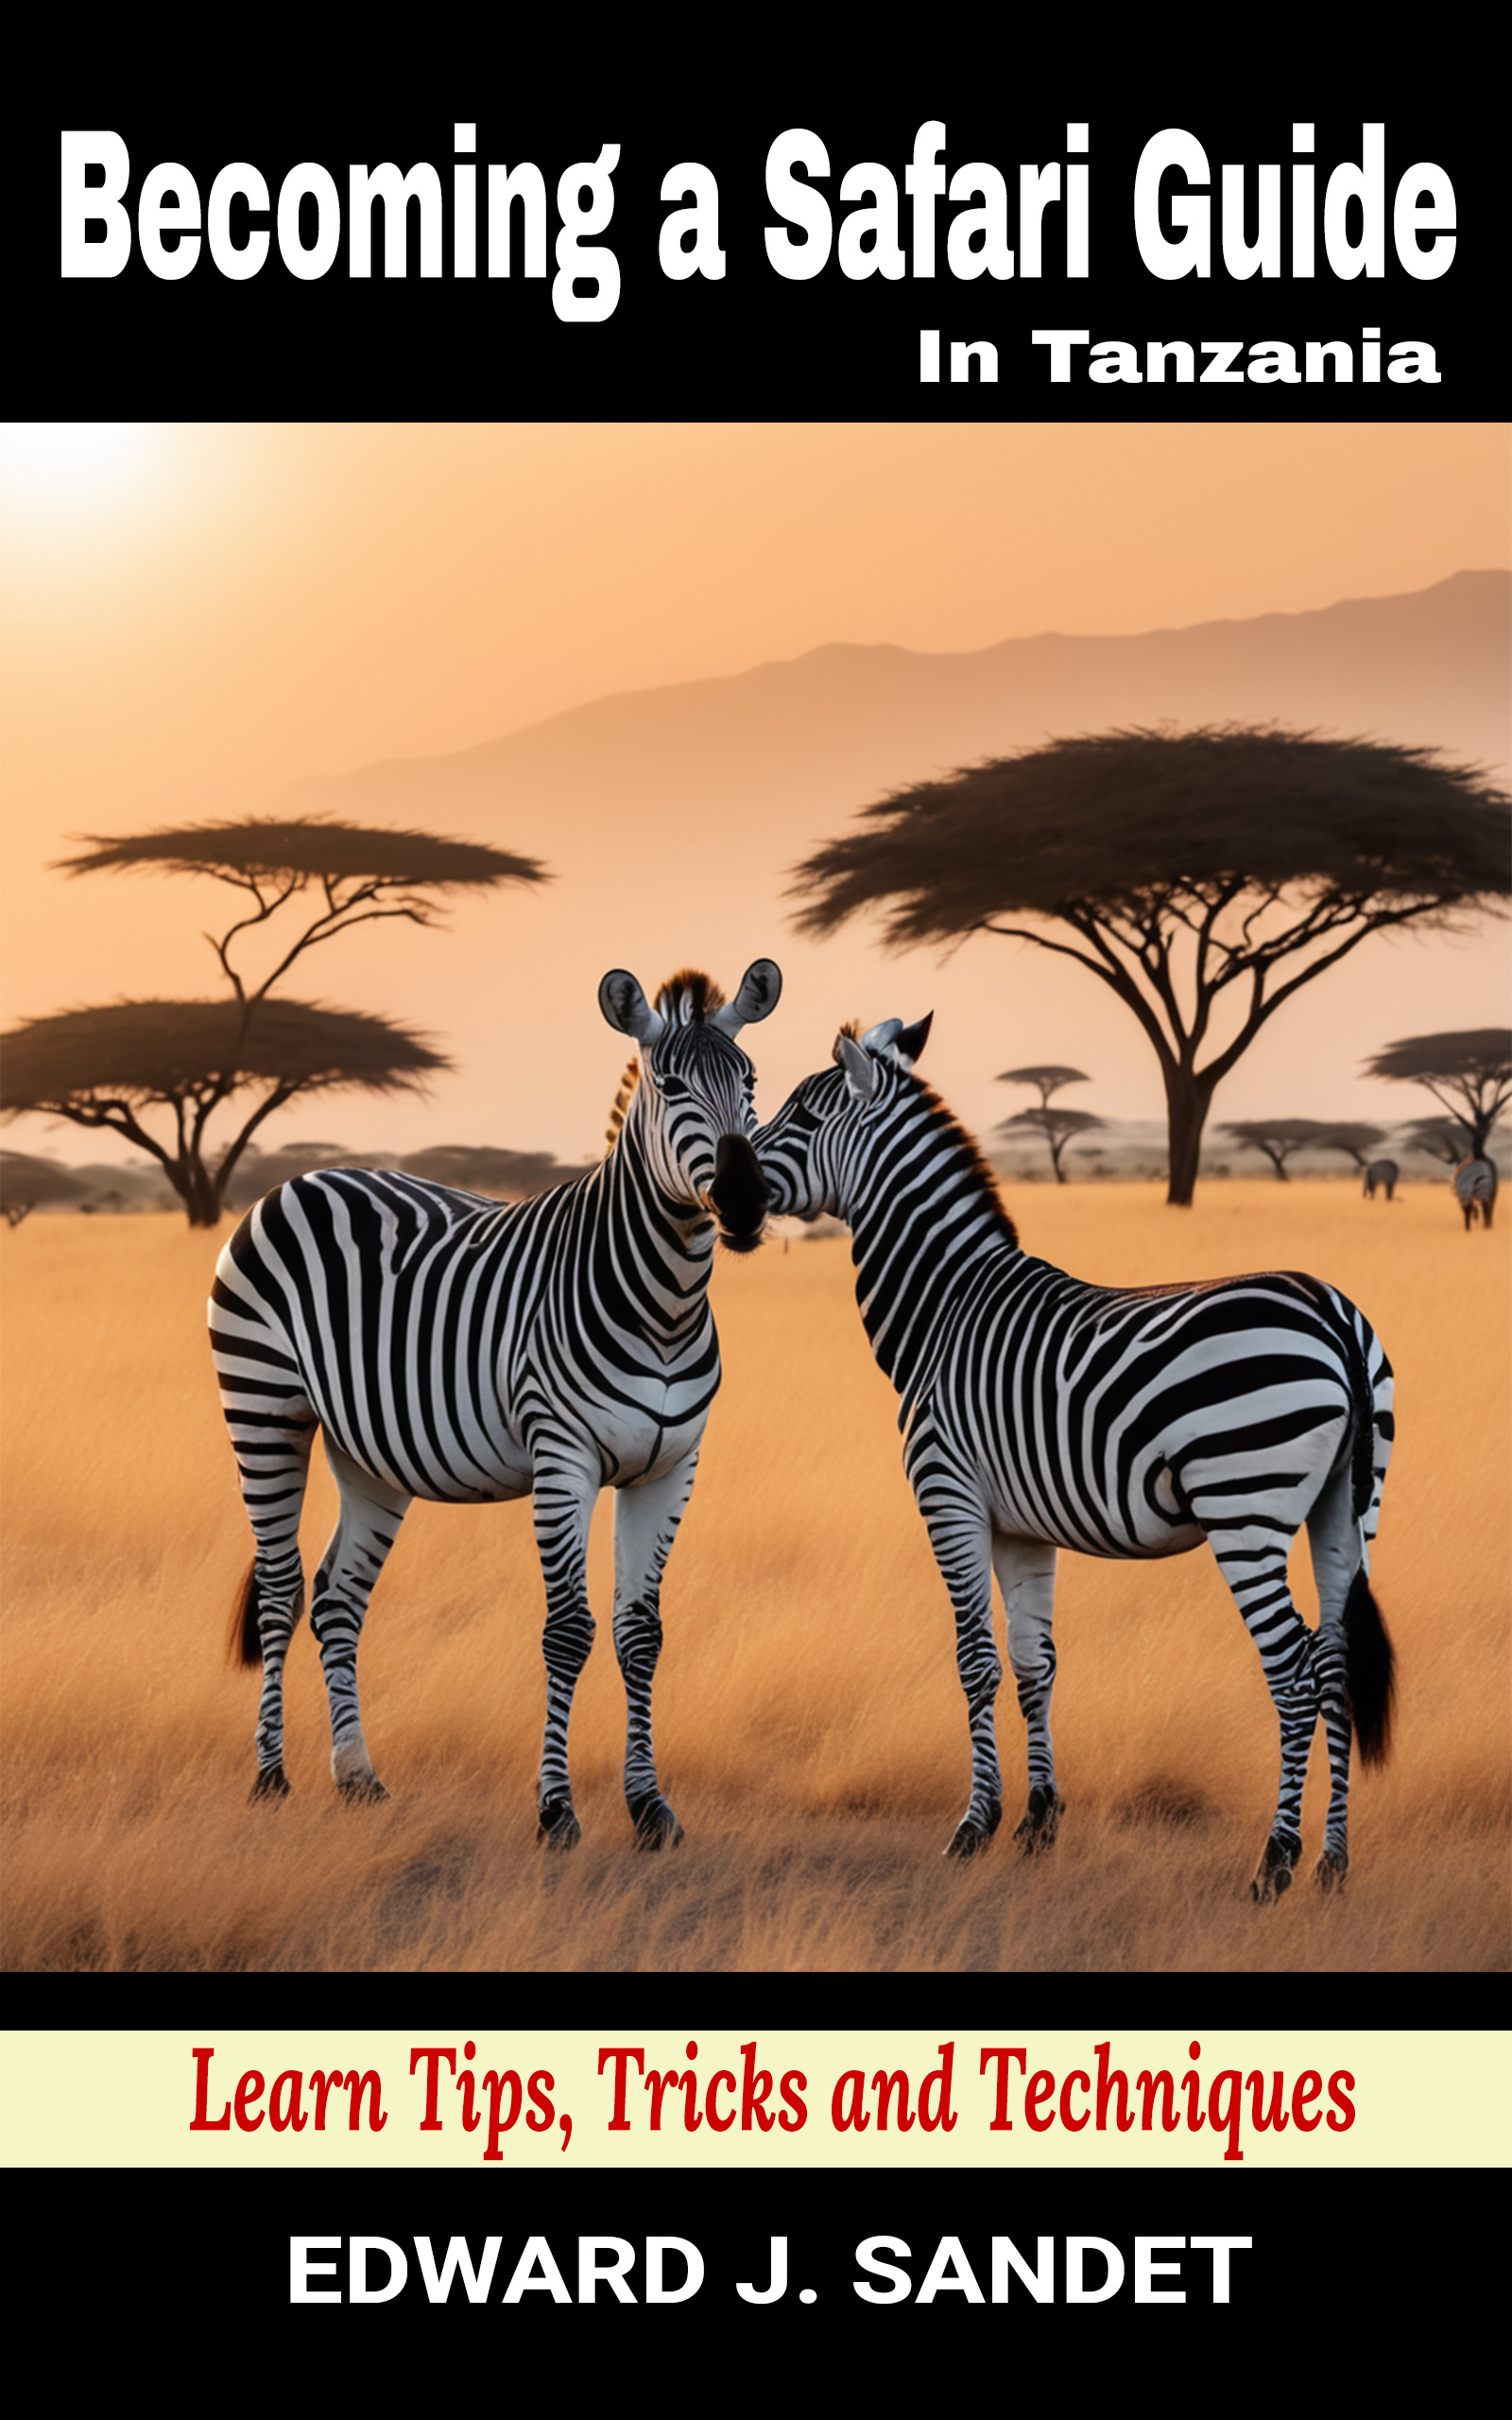 How-to-becoming-a-Successful-Safari-Guide-in-Tanzania